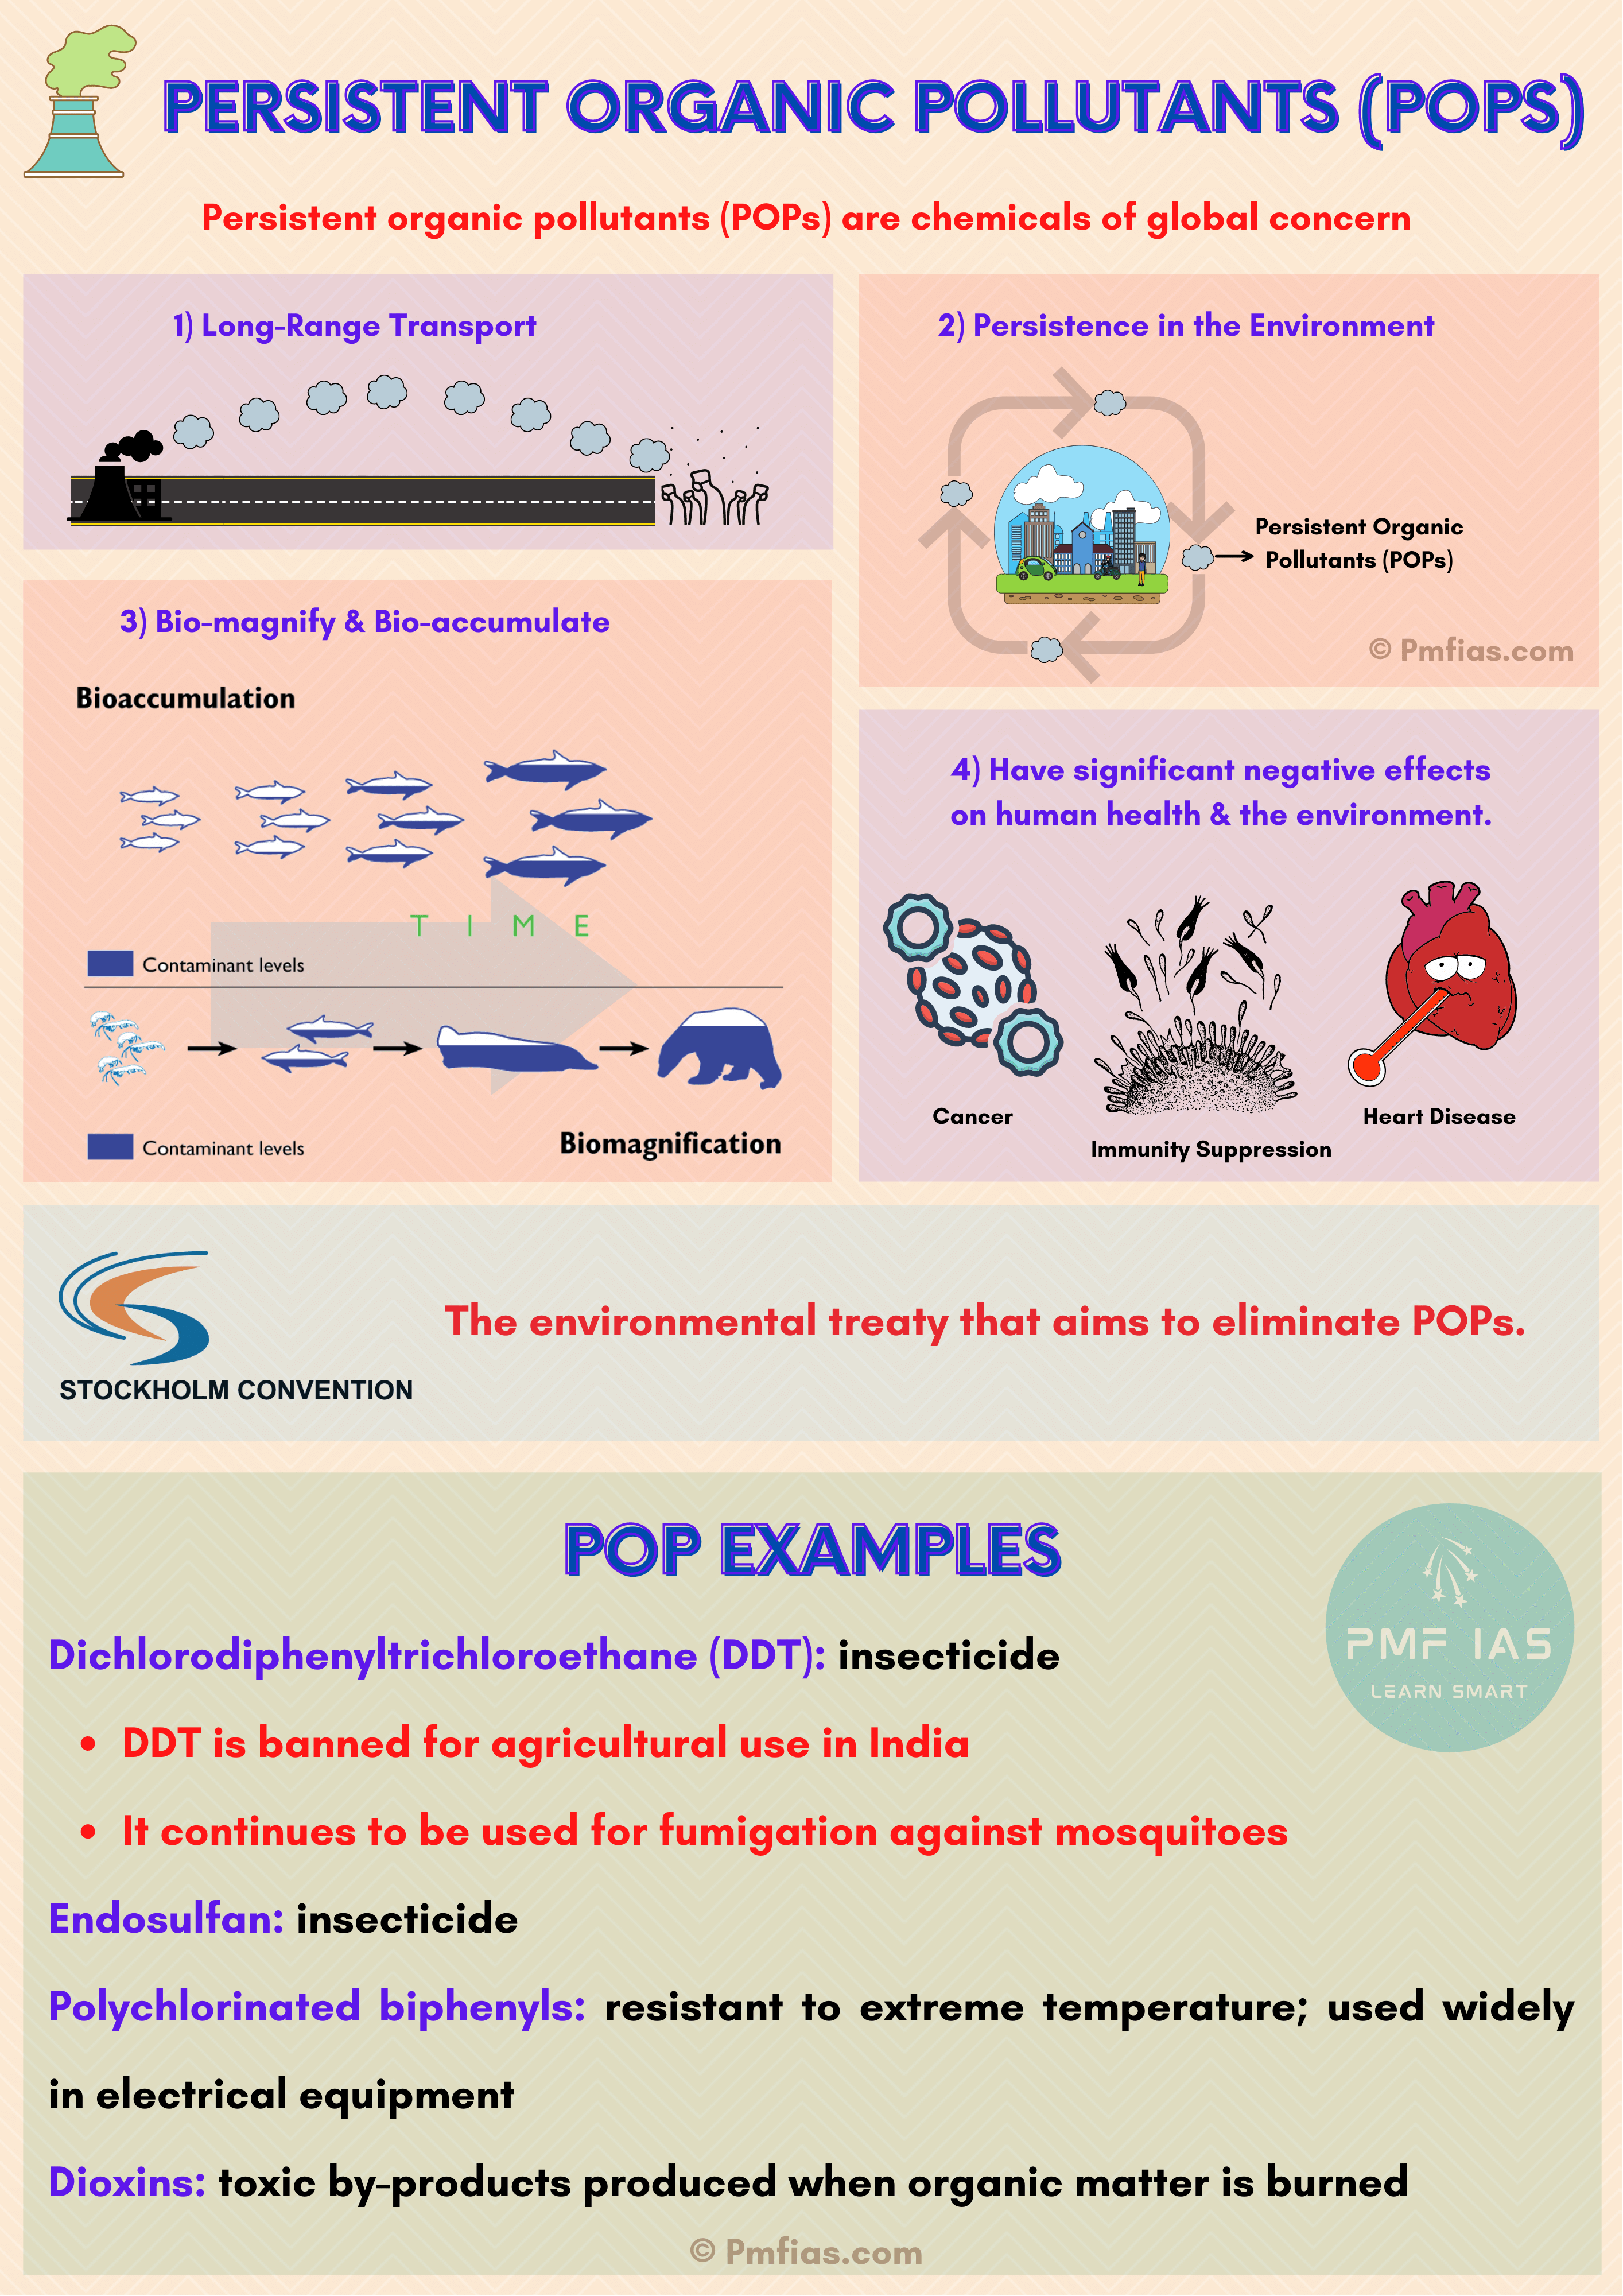 Persistent Organic Pollutants (POPs)